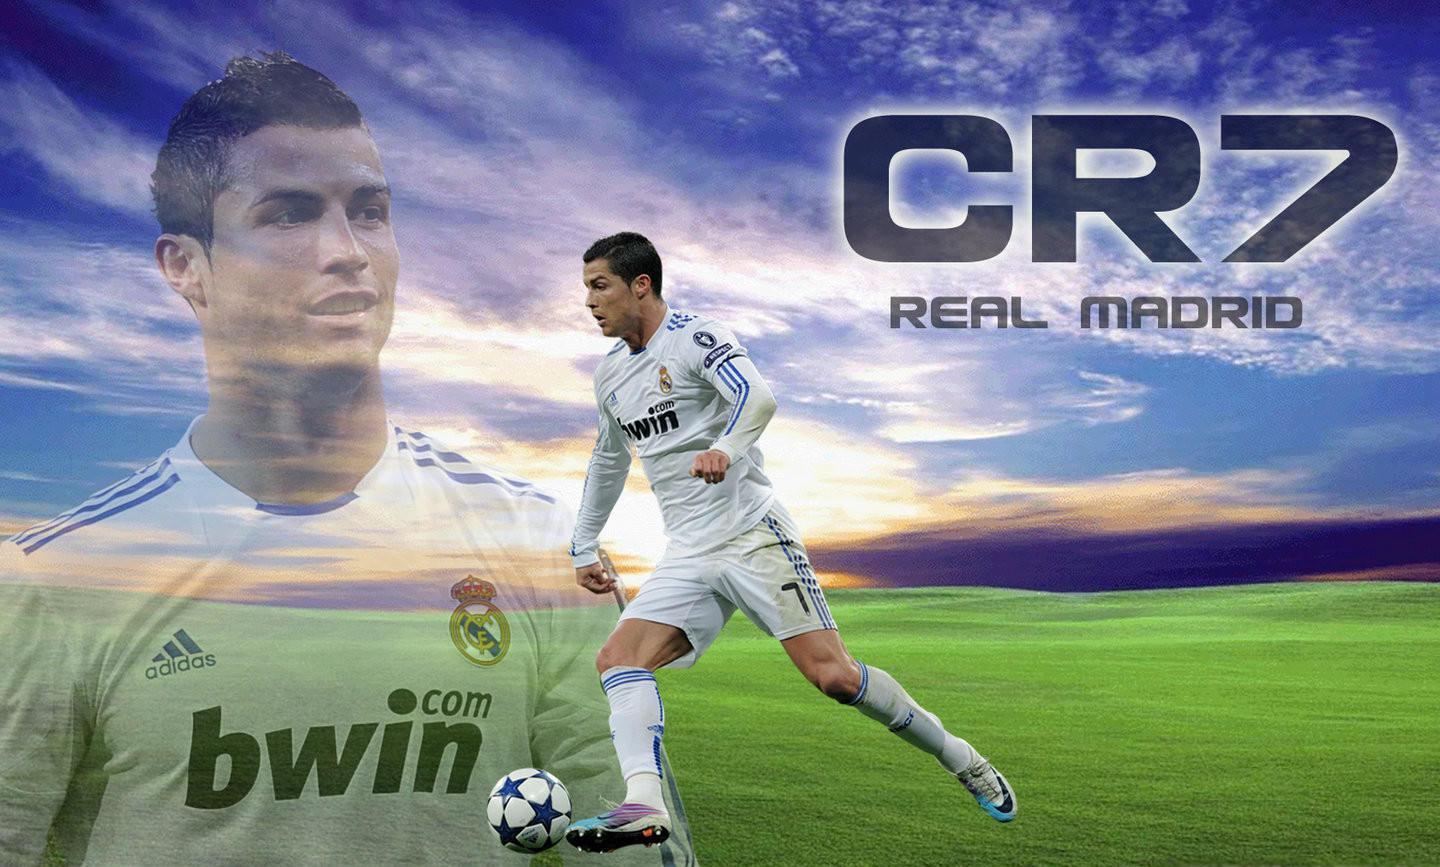 Cristiano Ronaldo On Real Madrid Wallpaper Ful Wallpaper